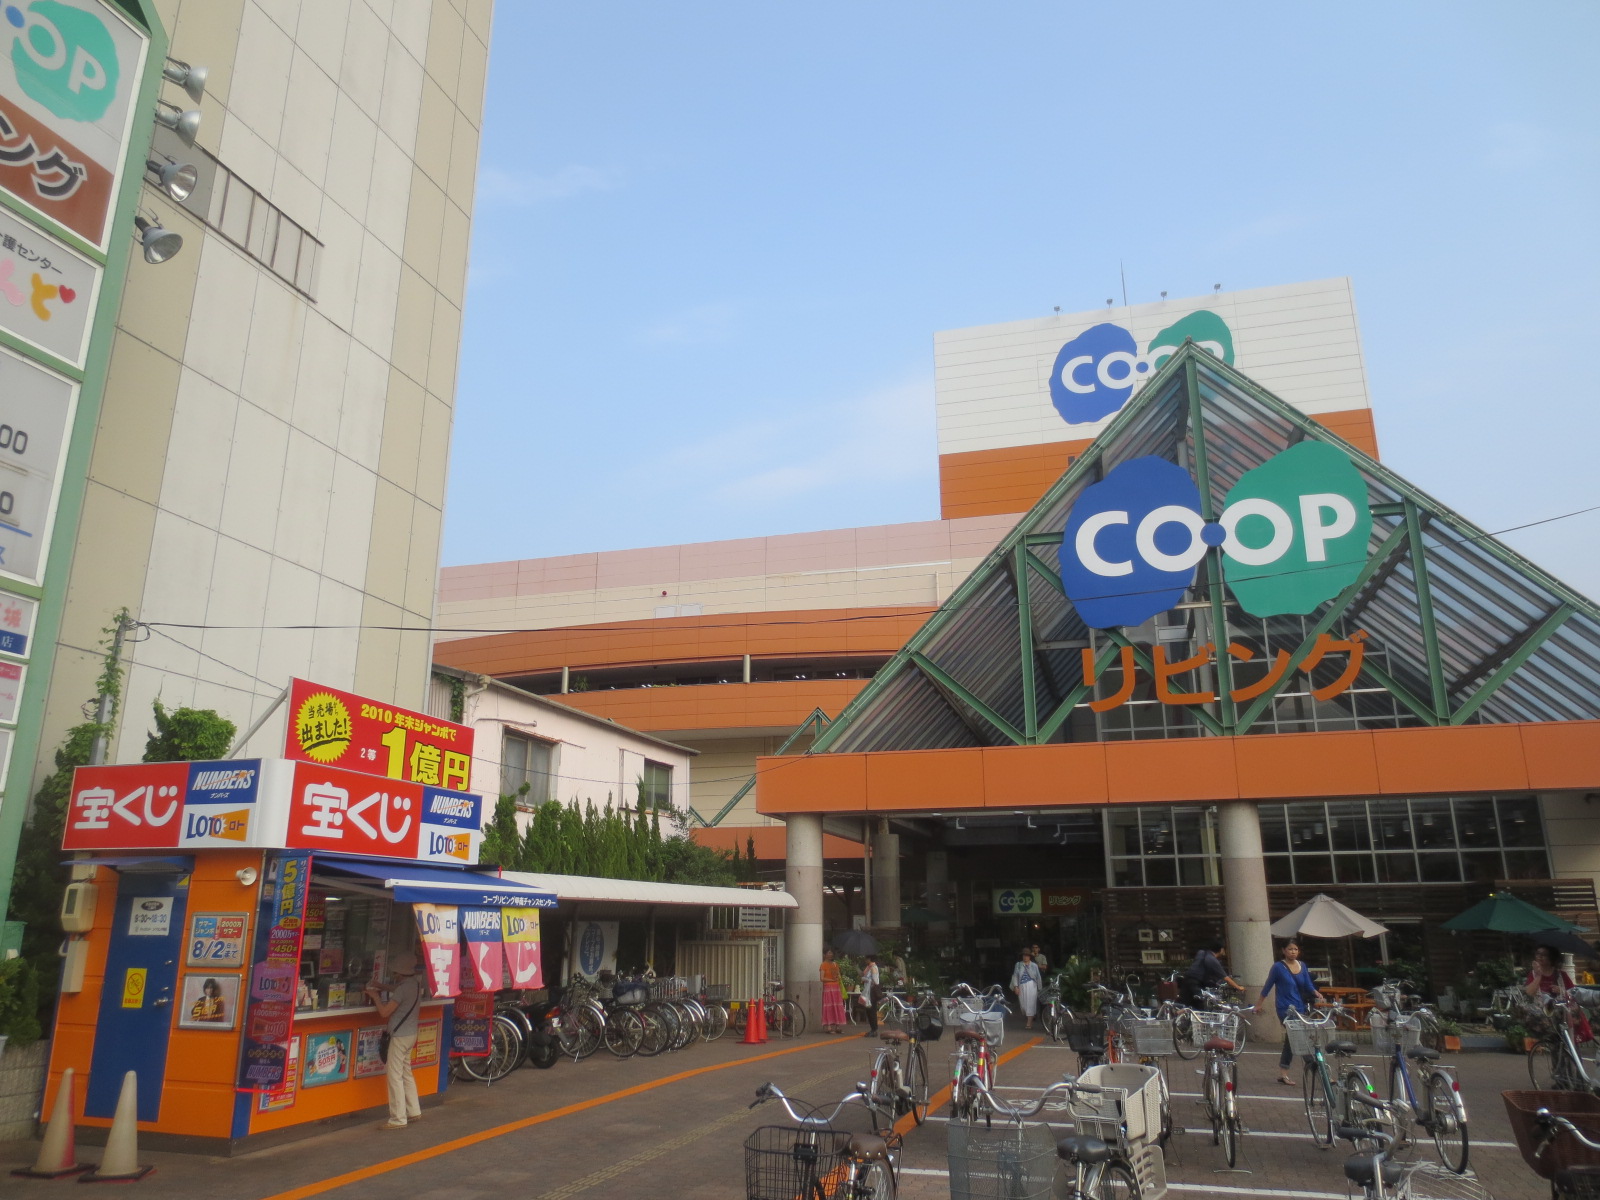 Home center. 834m to Cope living Konan store (hardware store)